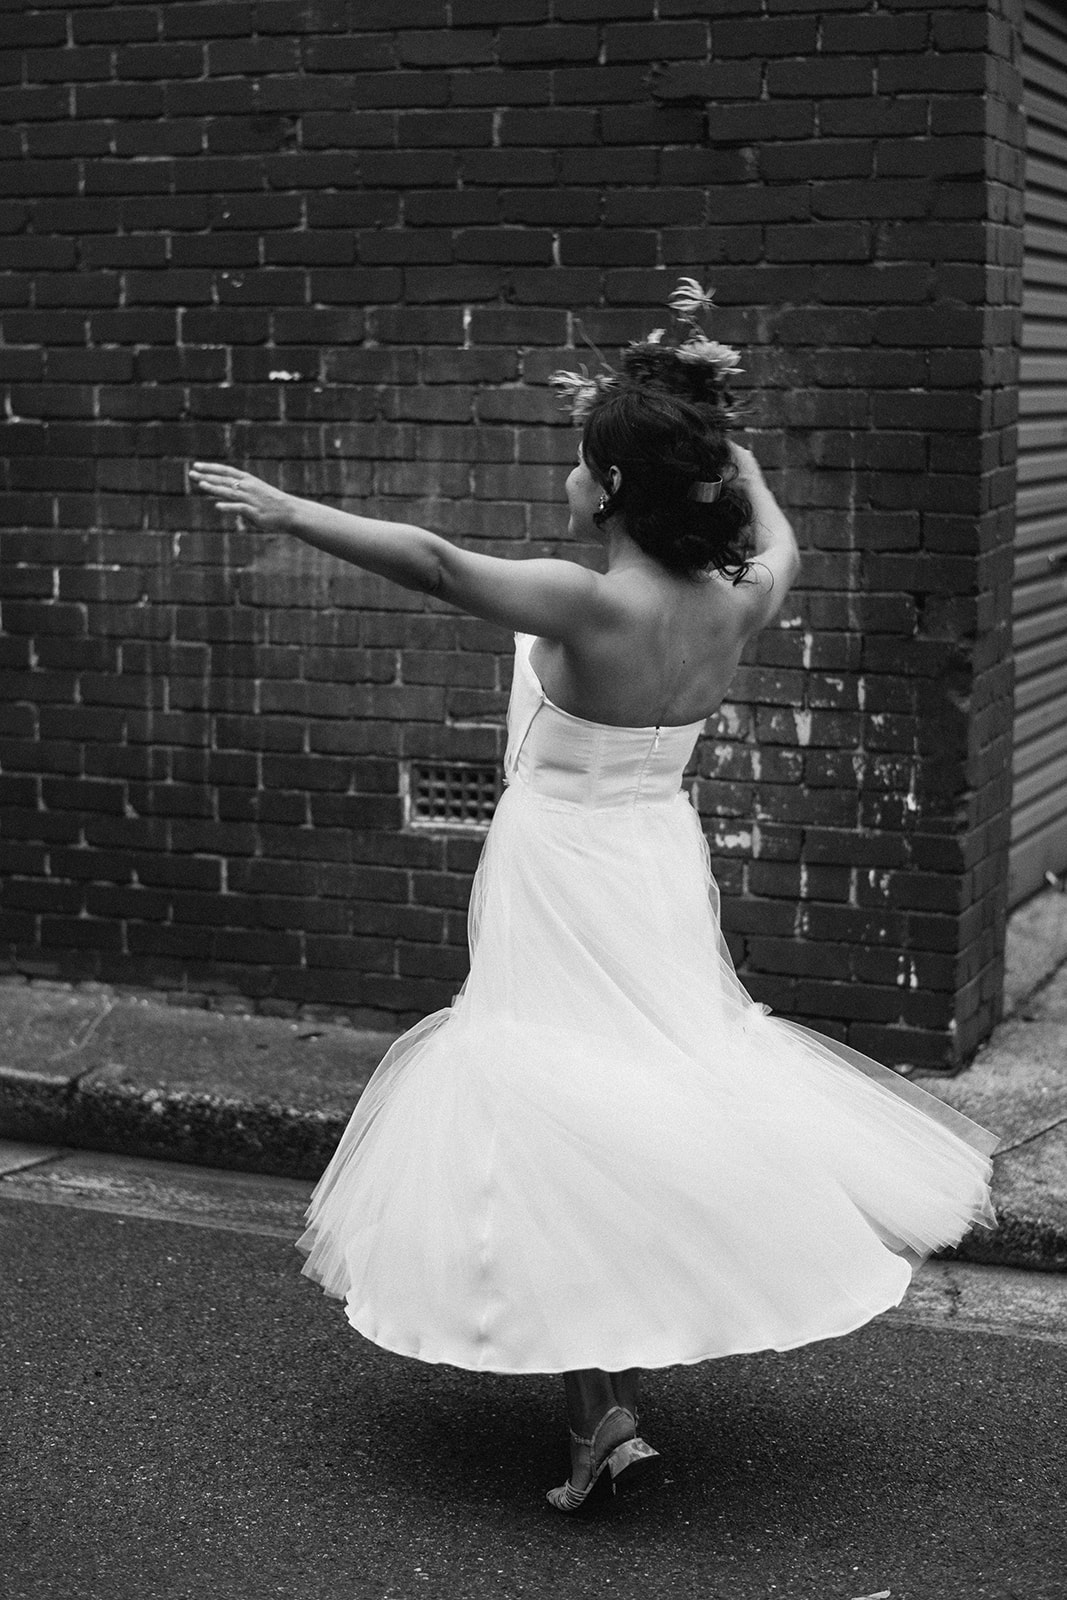 Scott Surplice portrait of bride in front of dark brick wall as she spins